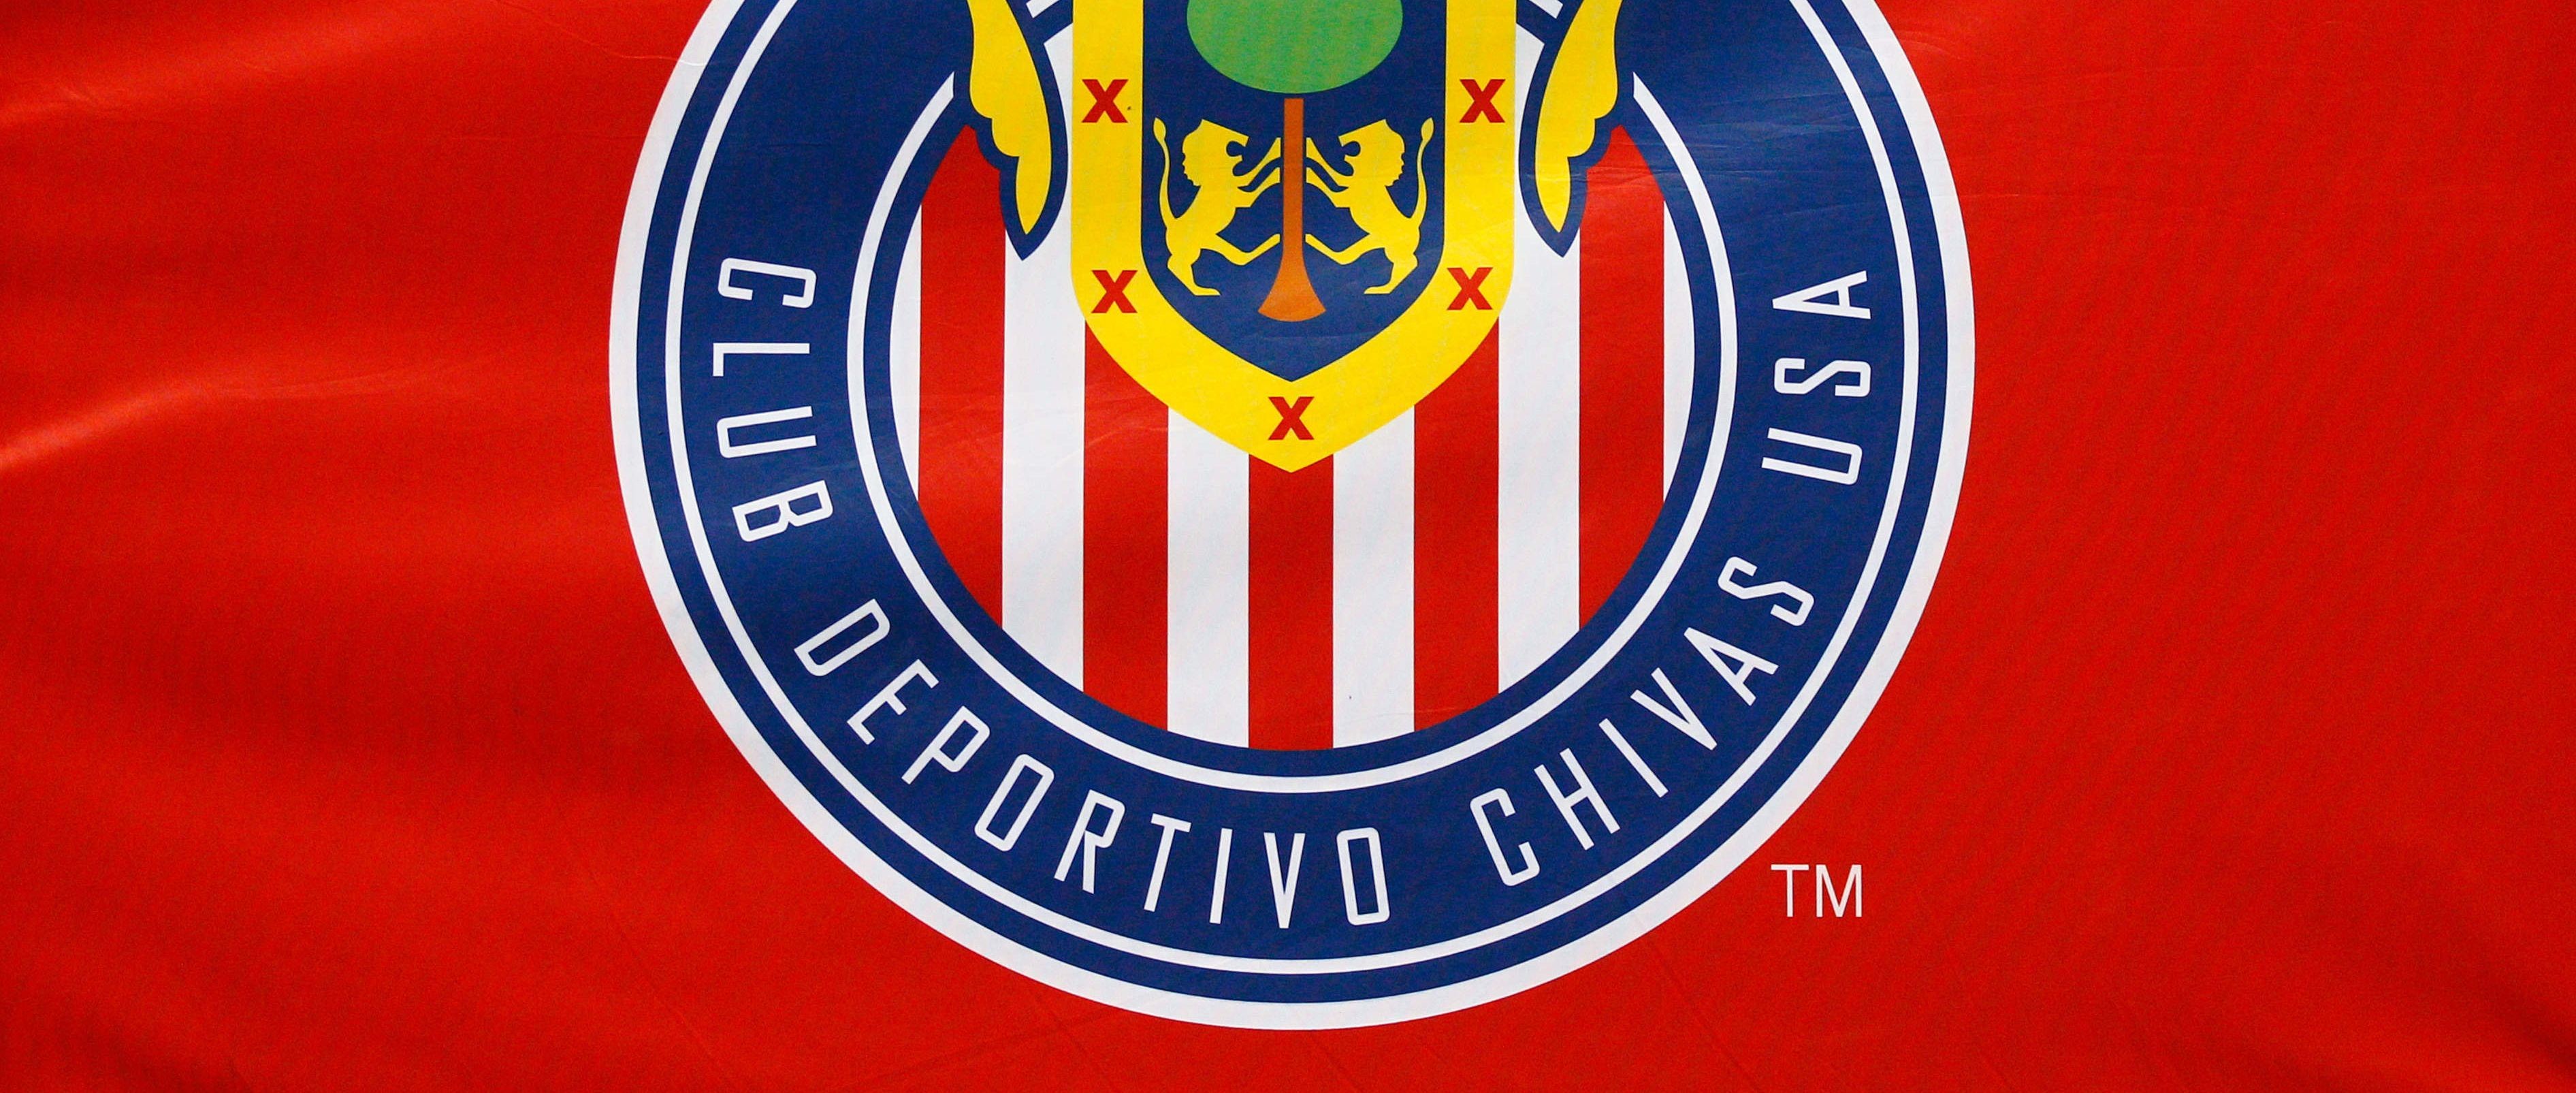 3784x1605 MLS Soccer Team Chivas USA Hit With Third Discrimination .